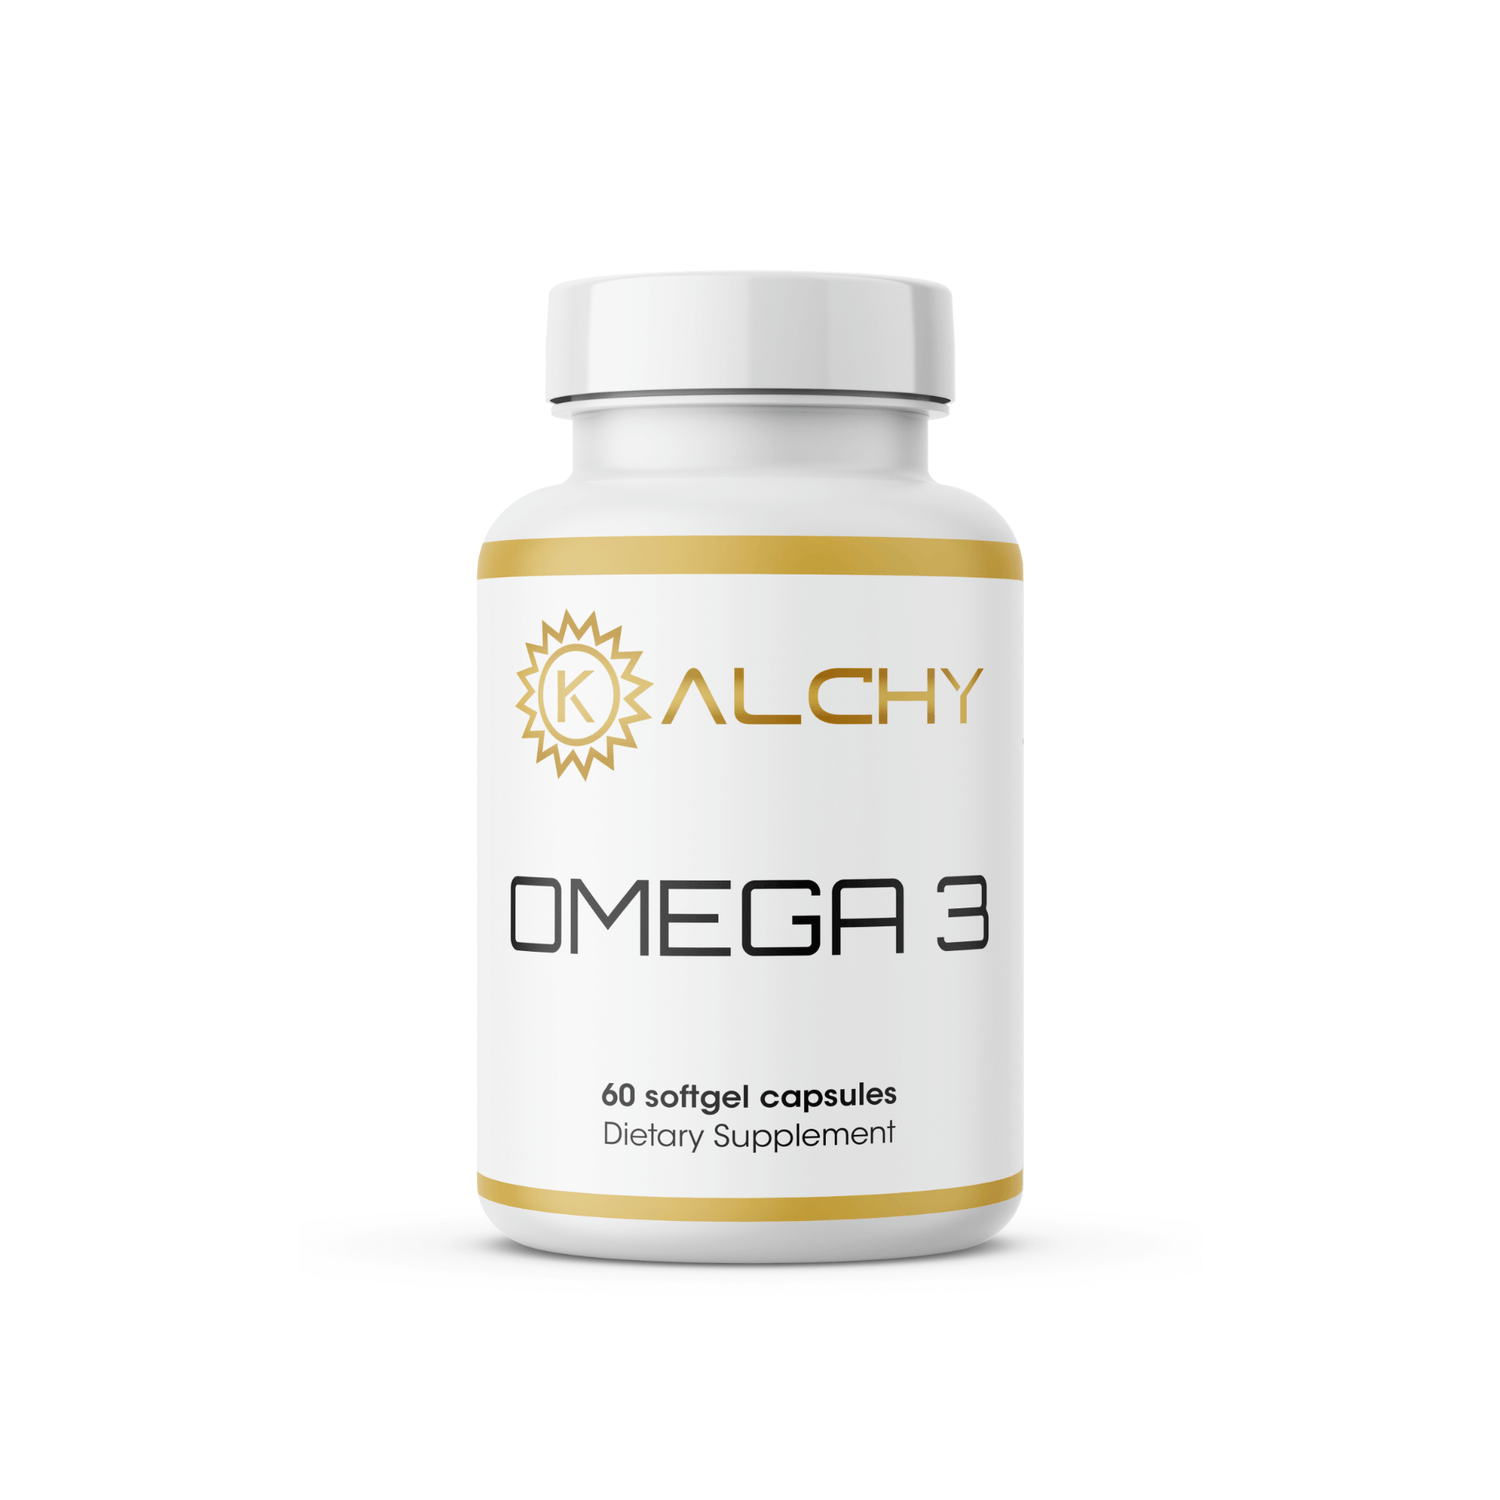 Omega 3 - Kalchy